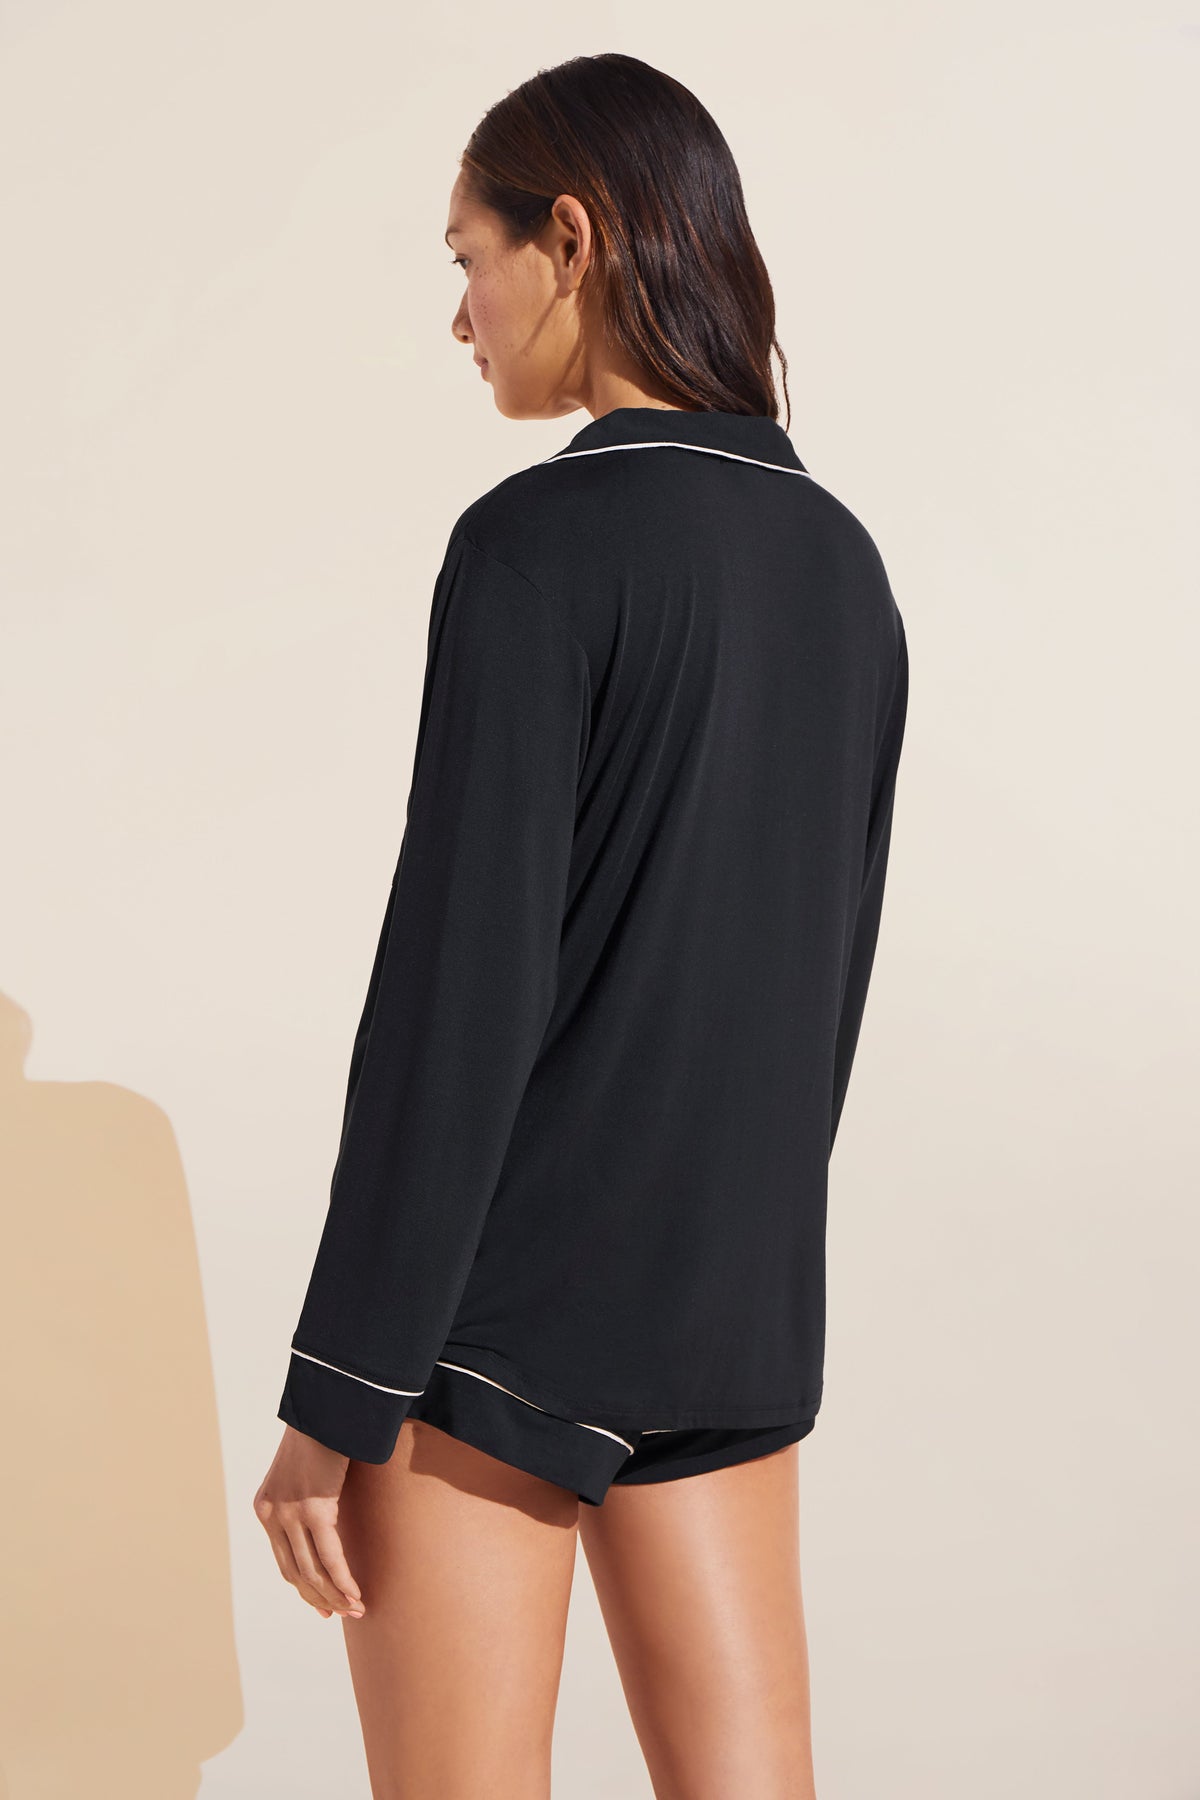 Gisele Long Sleeve Short PJ Set in Black/Sorbet